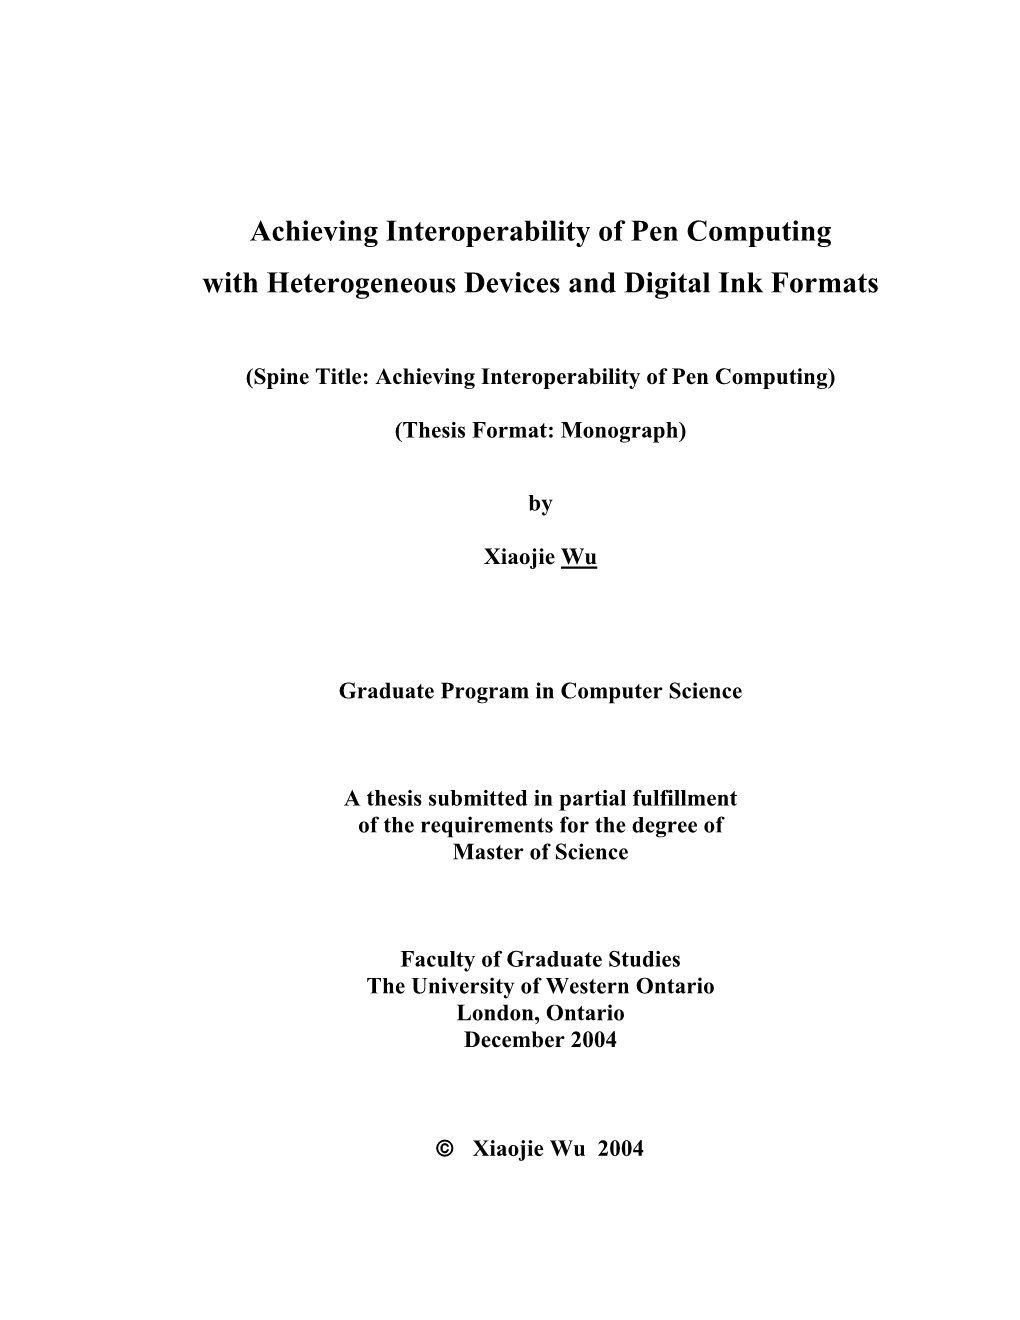 Achieving Interoperability of Pen Computing Among Heterogeneous